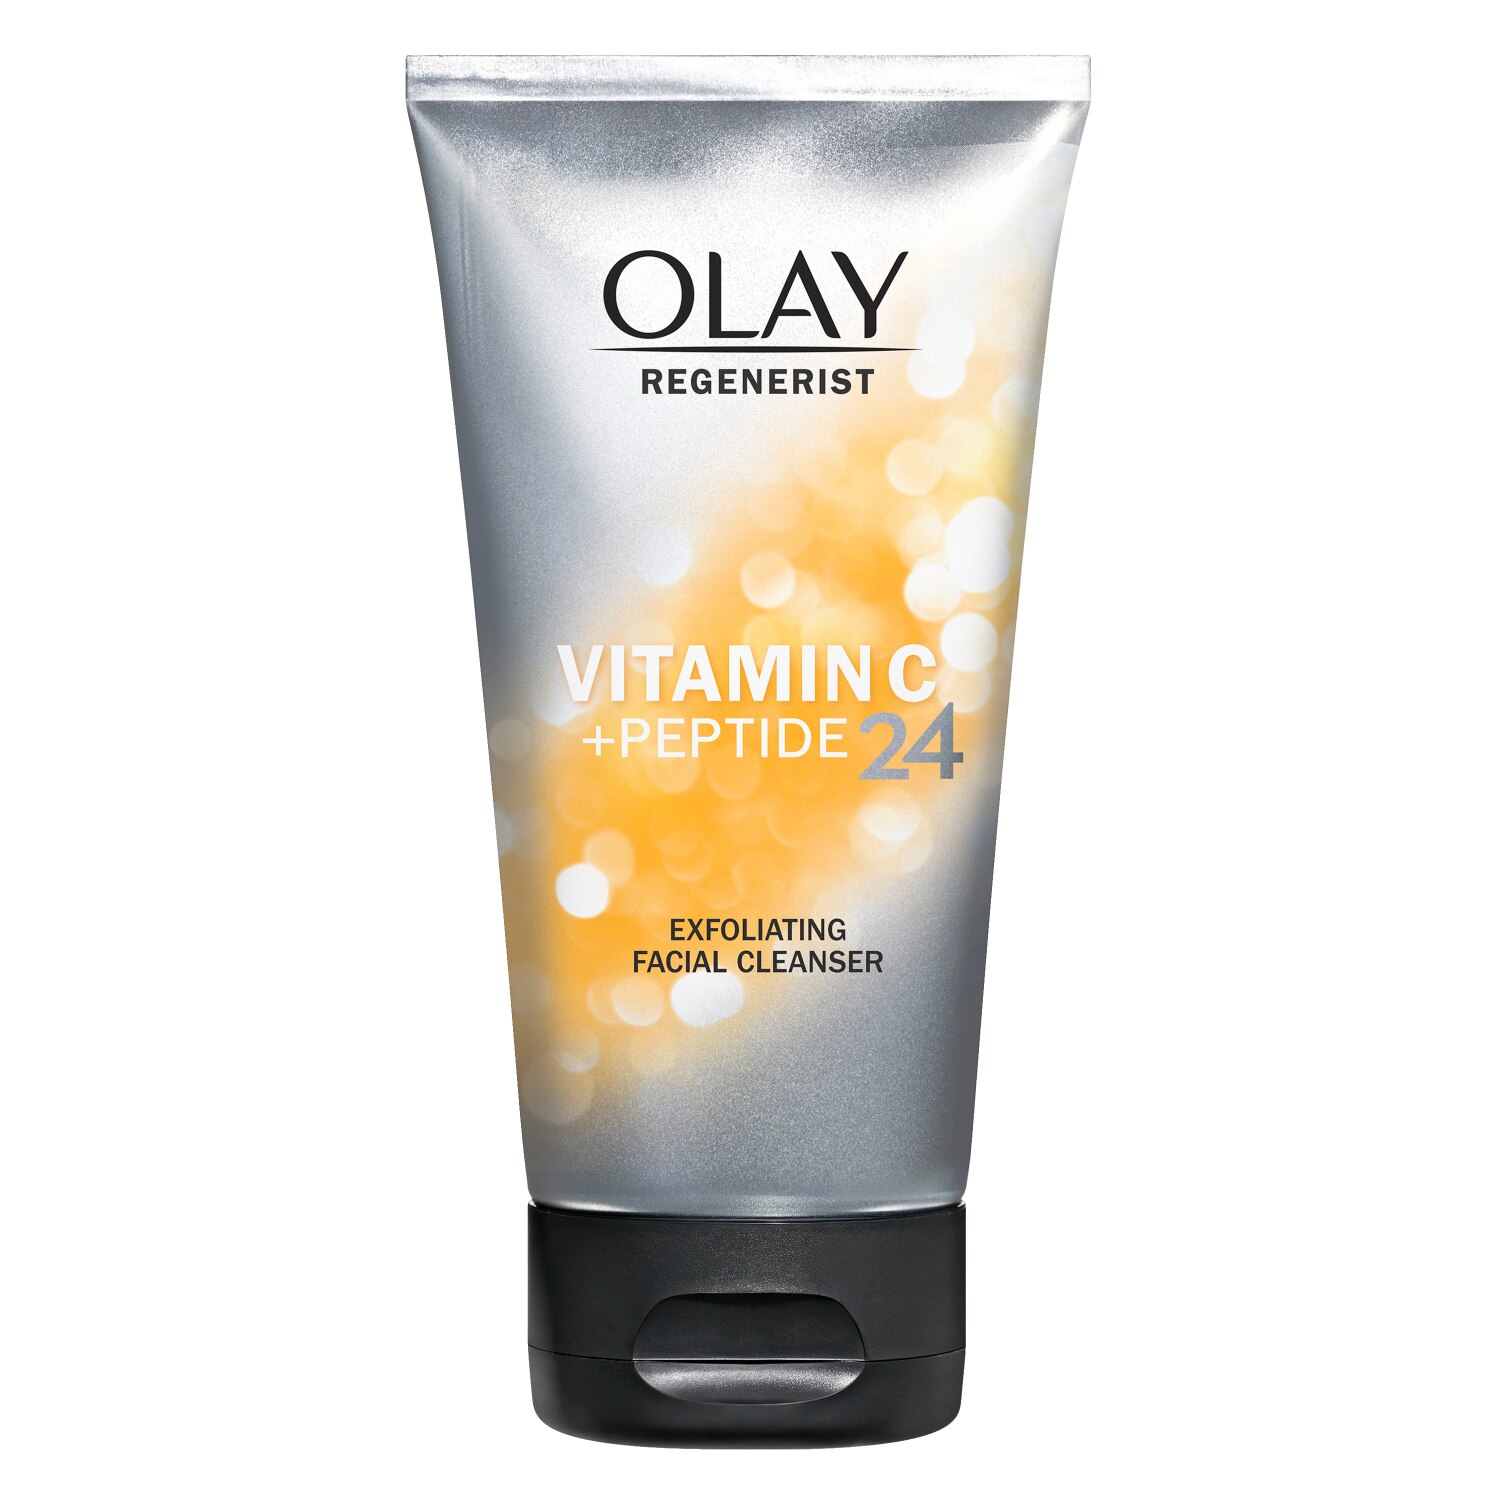 Olay Regenerist Vitamin C + Peptide 24 Exfoliating Facial Cleanser, 5 OZ